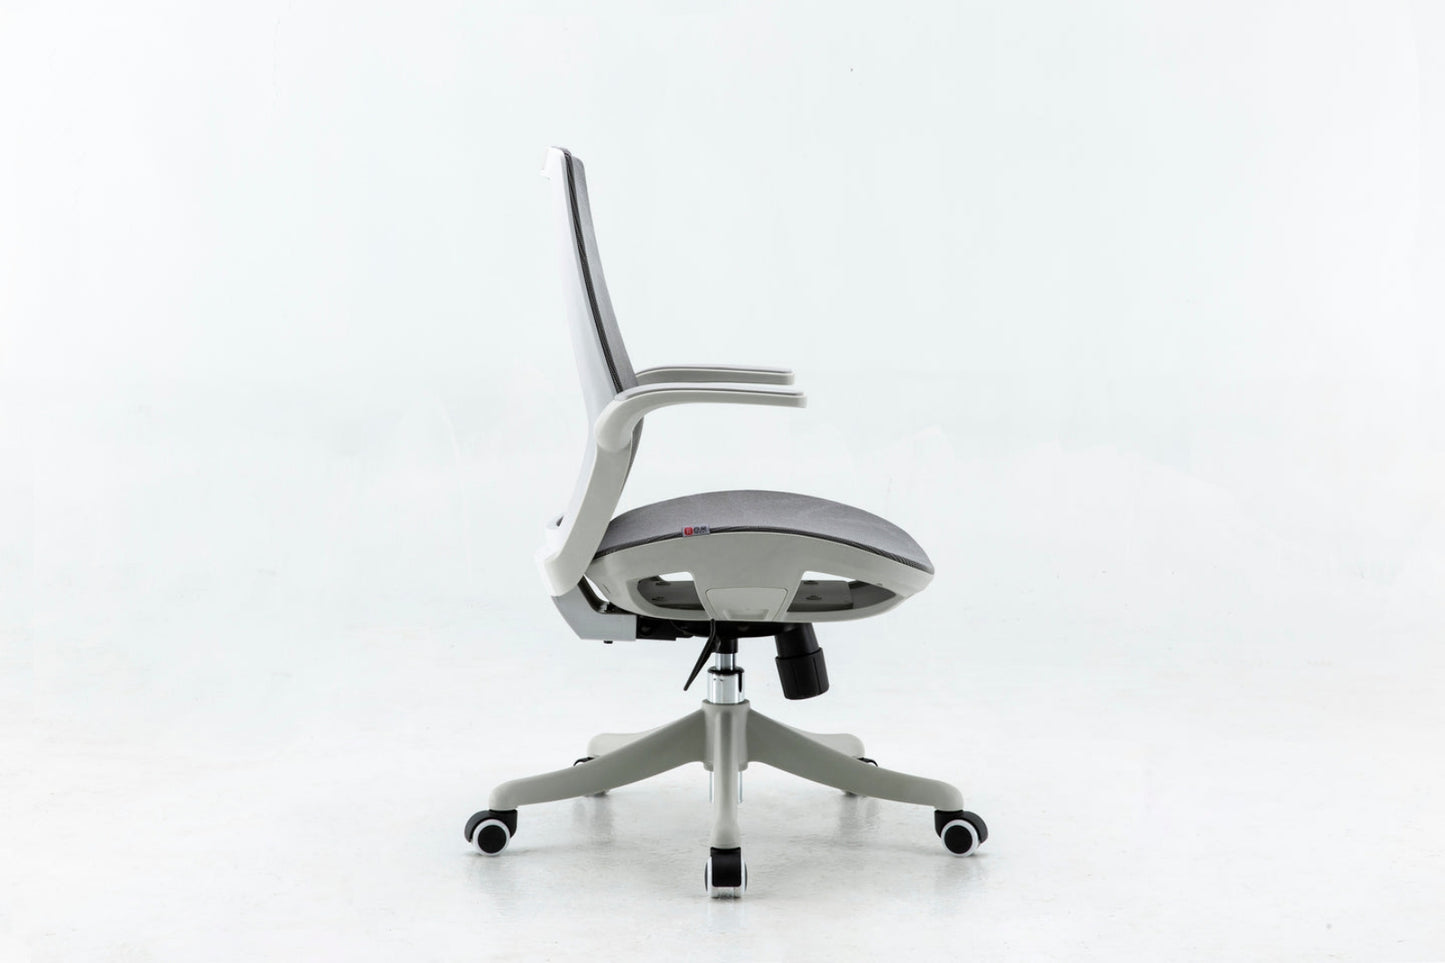 Sihoo M59B Full-mesh Ergonomic Chair